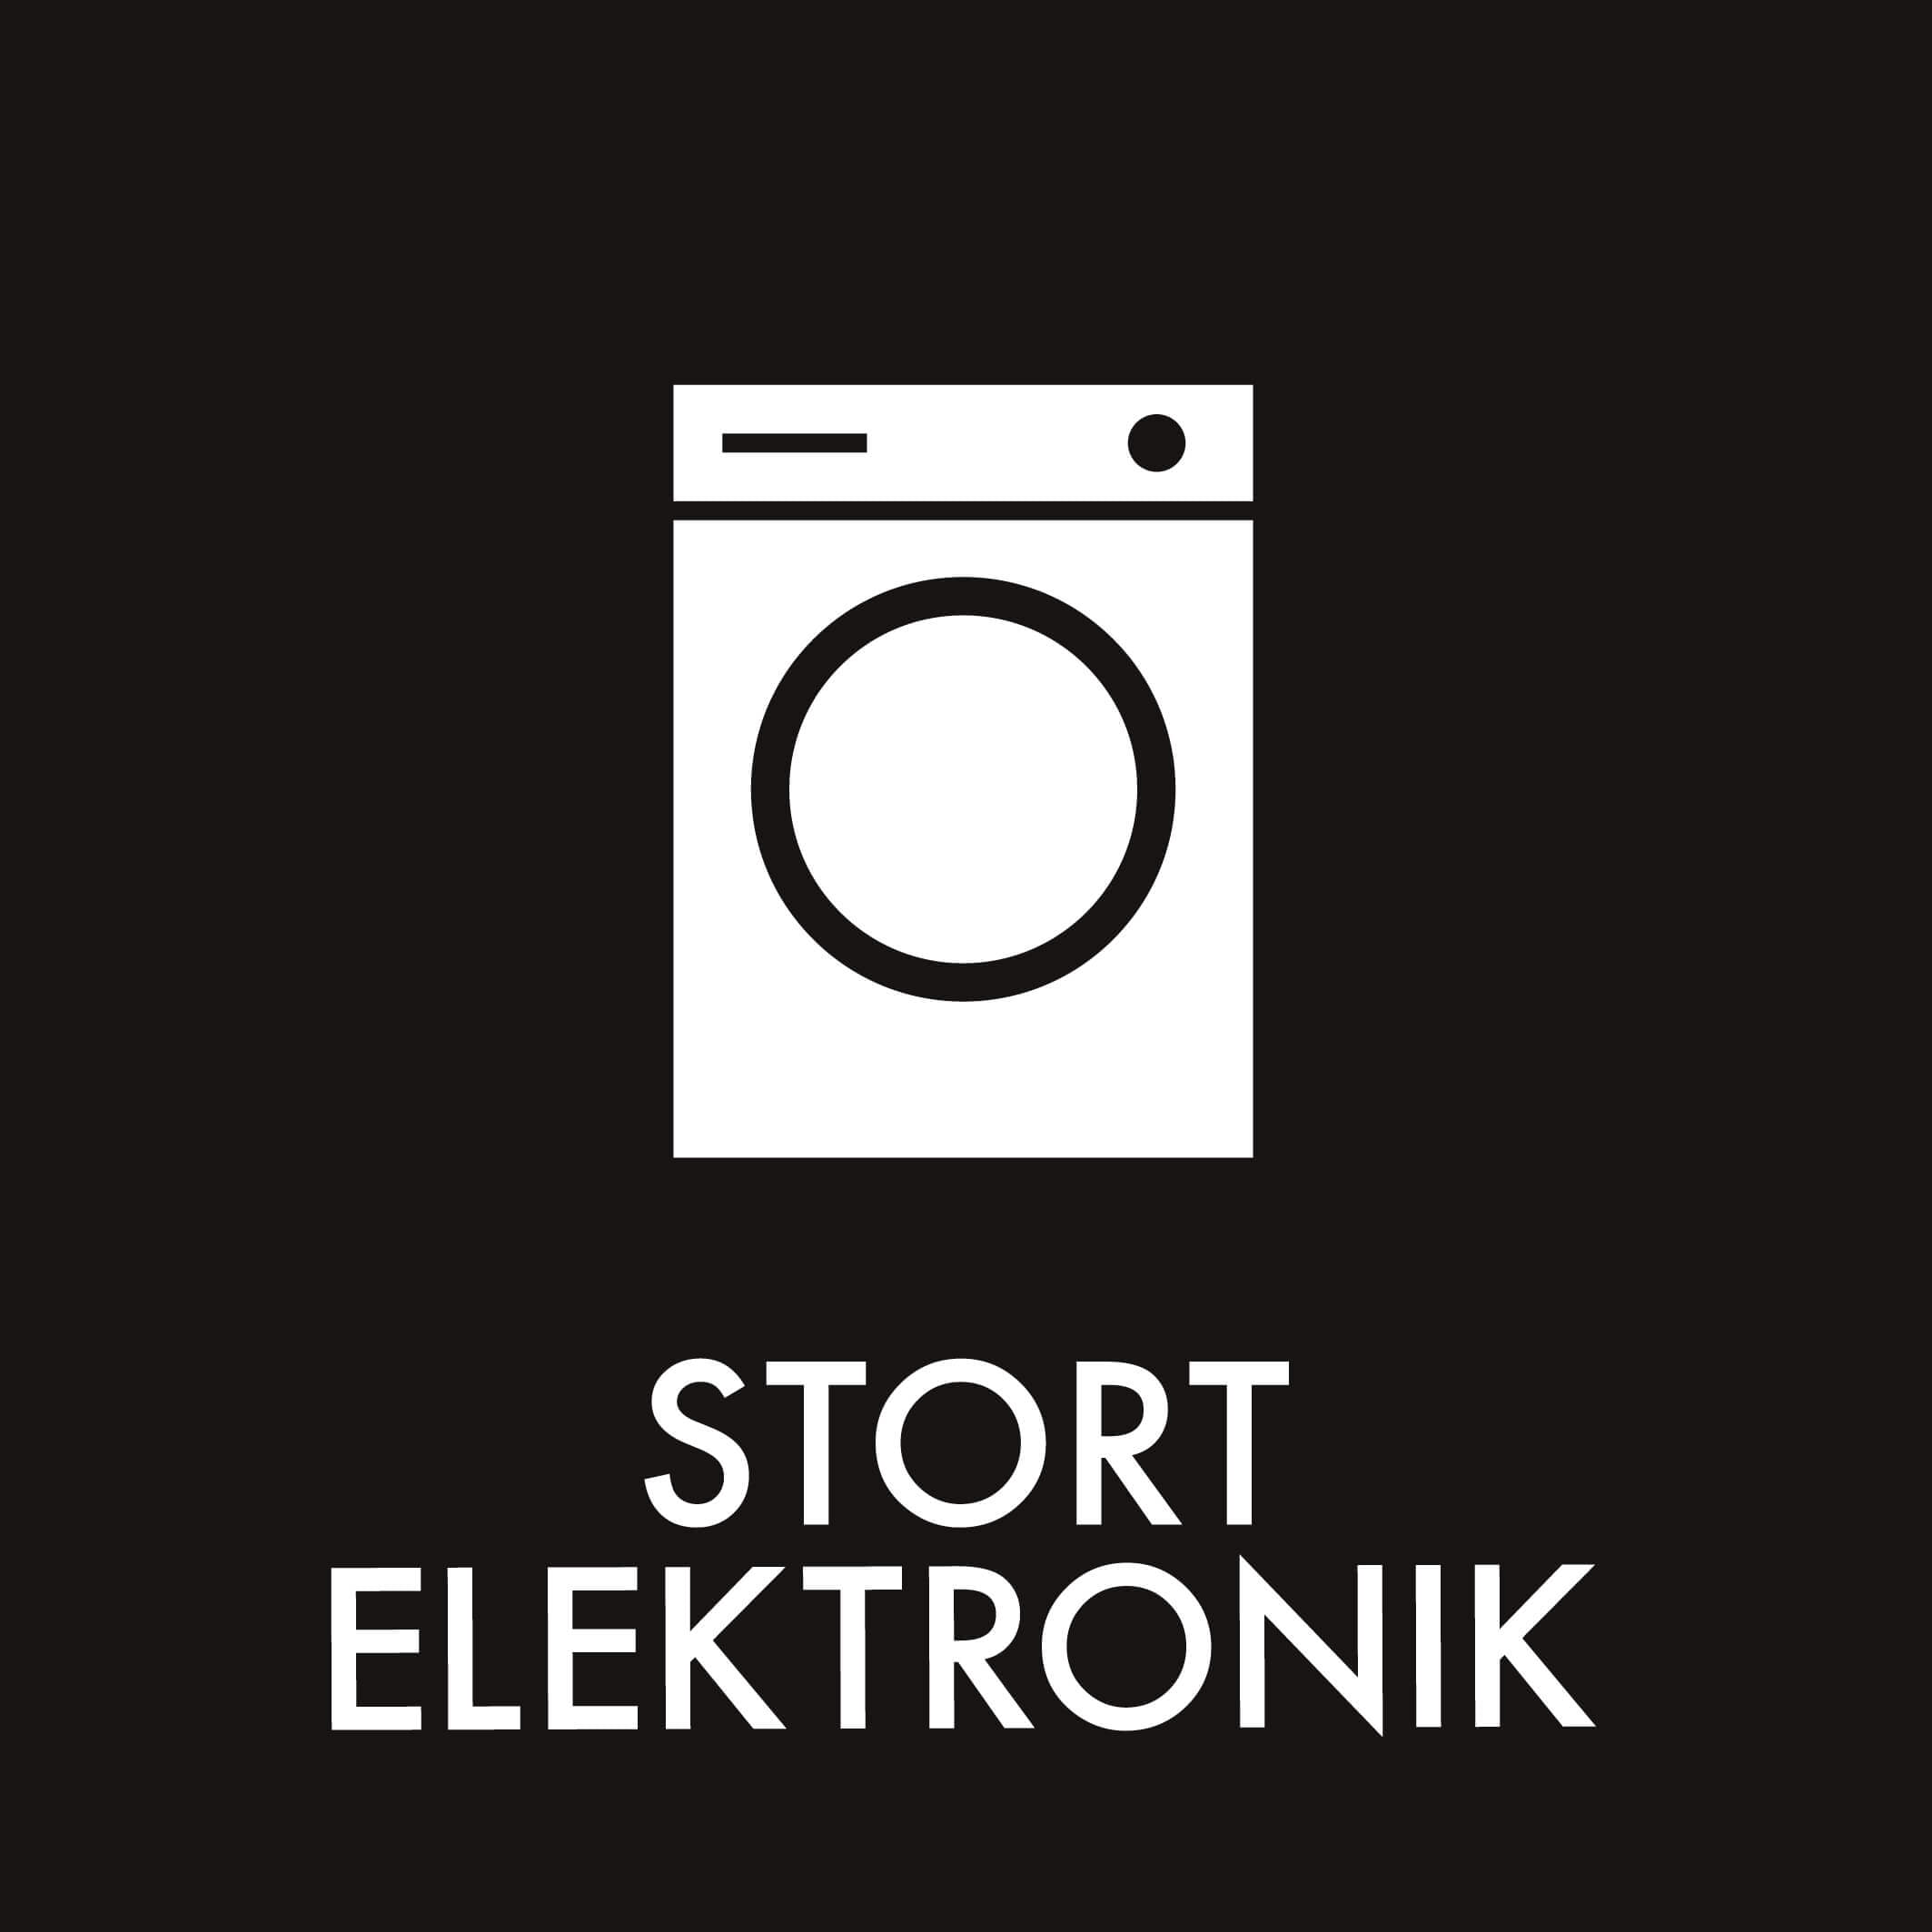 Dansk Affaldssortering - Stort elektronik sort